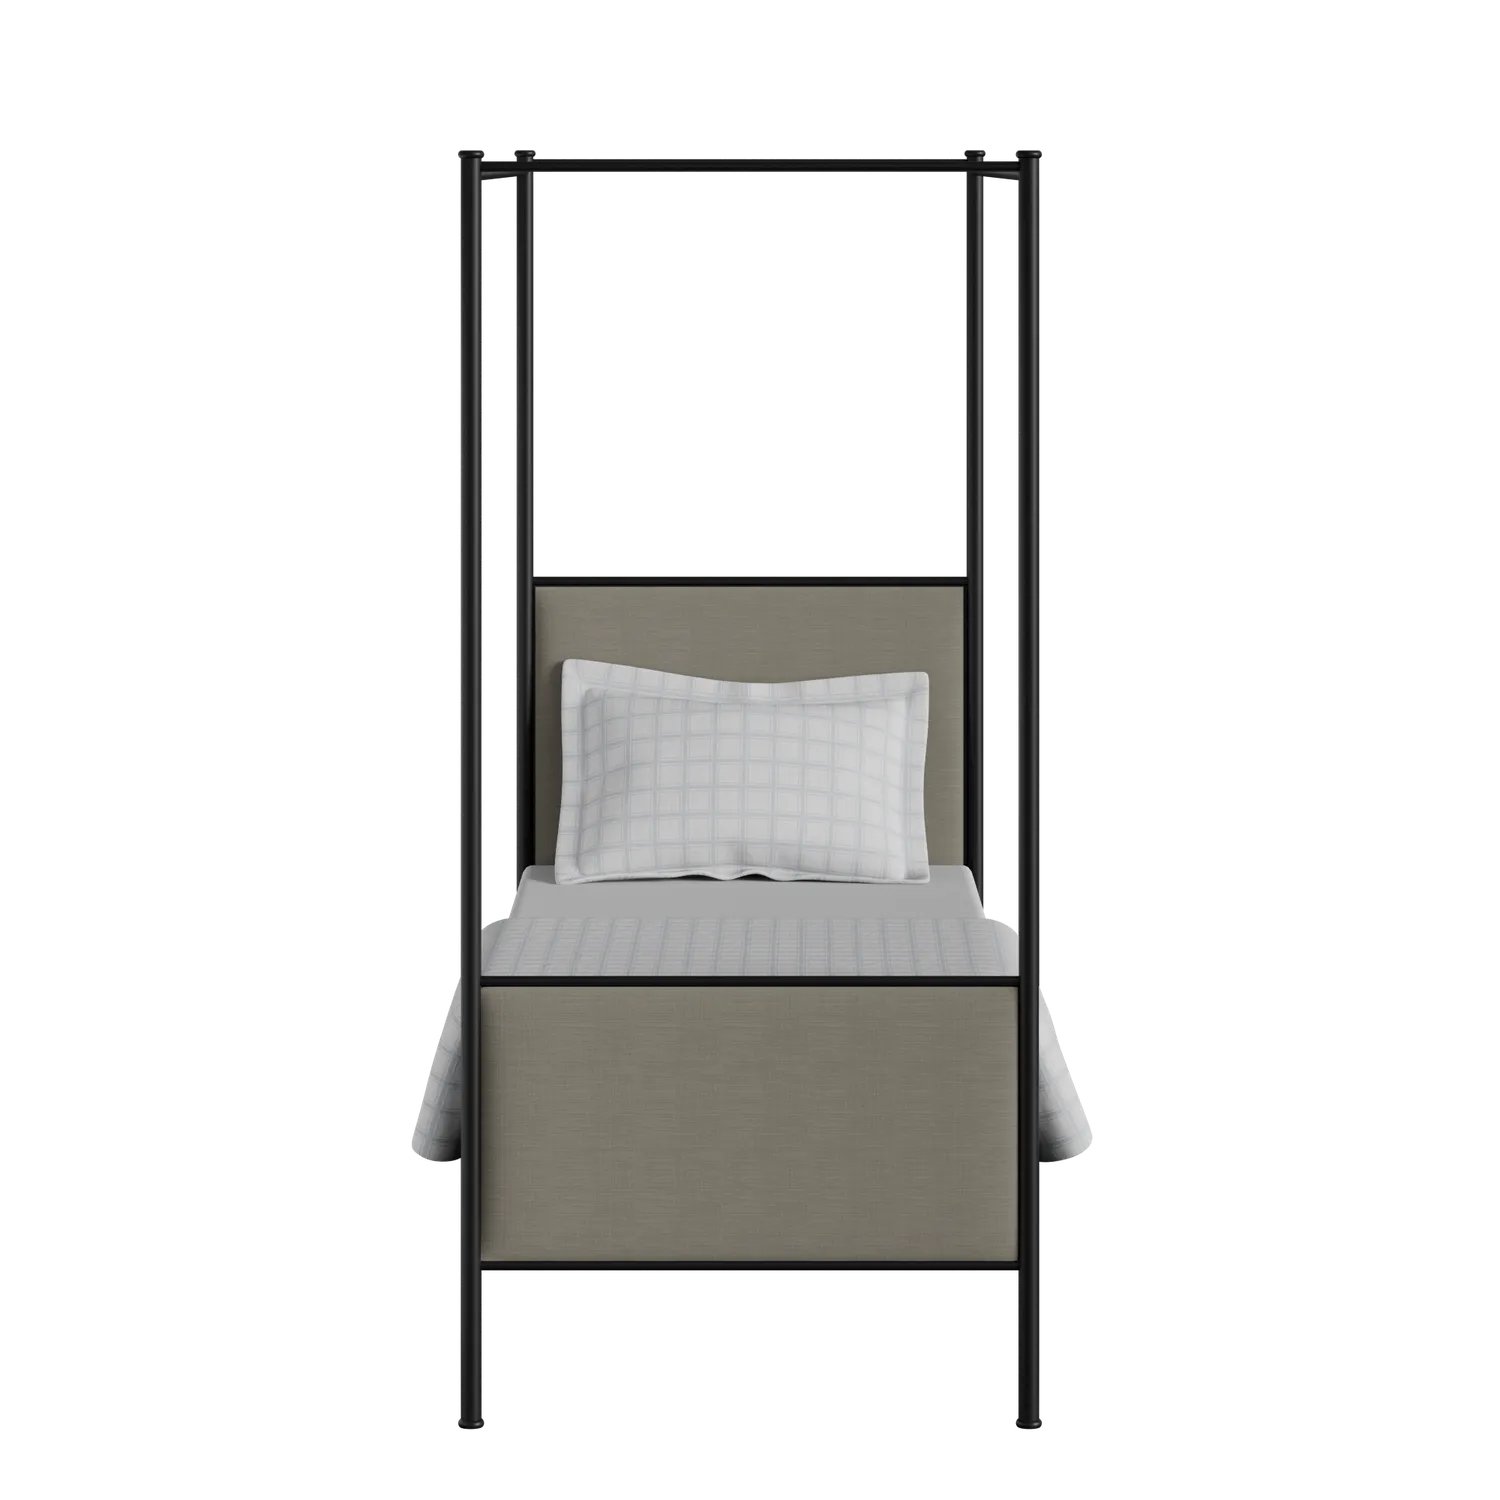 Reims iron/metal single bed in black